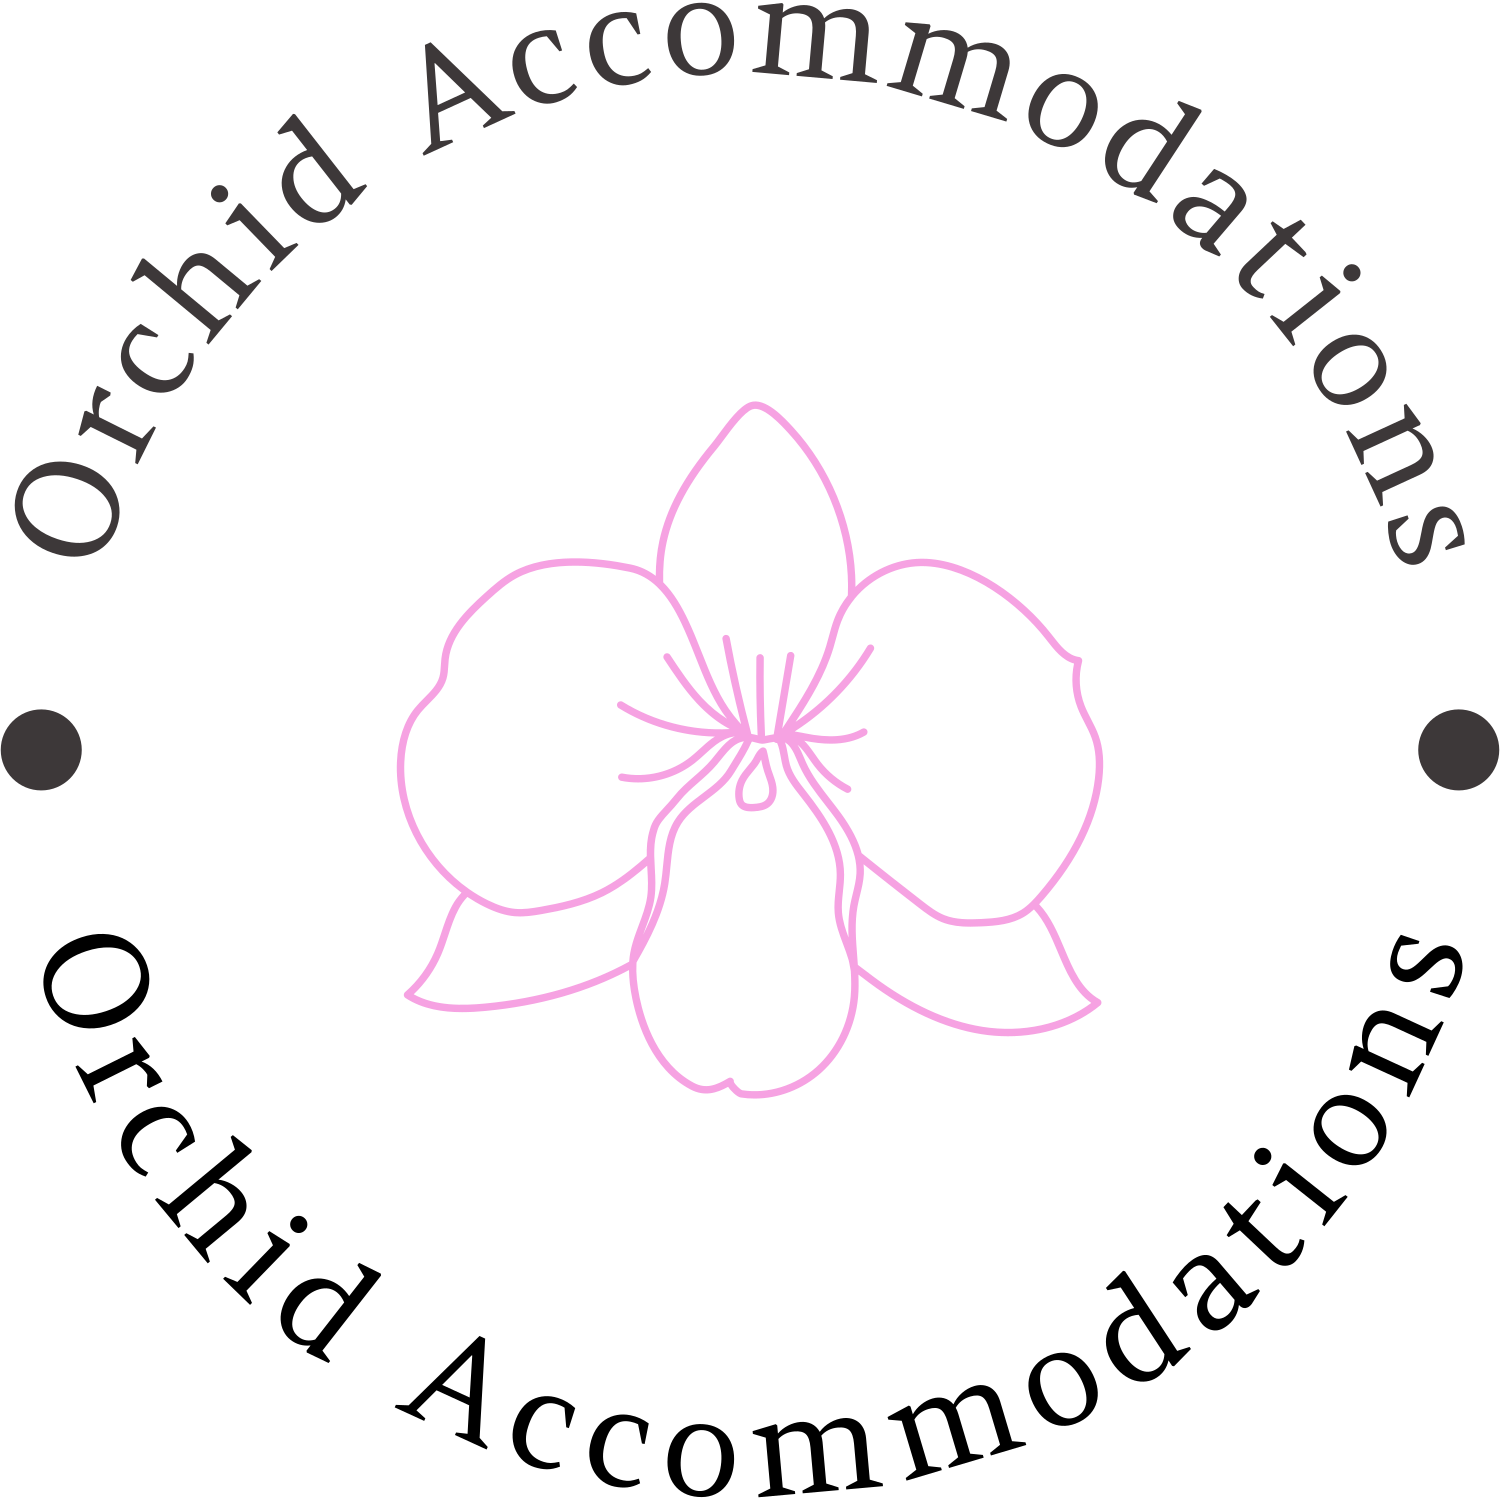 Orchidaccommodations.com